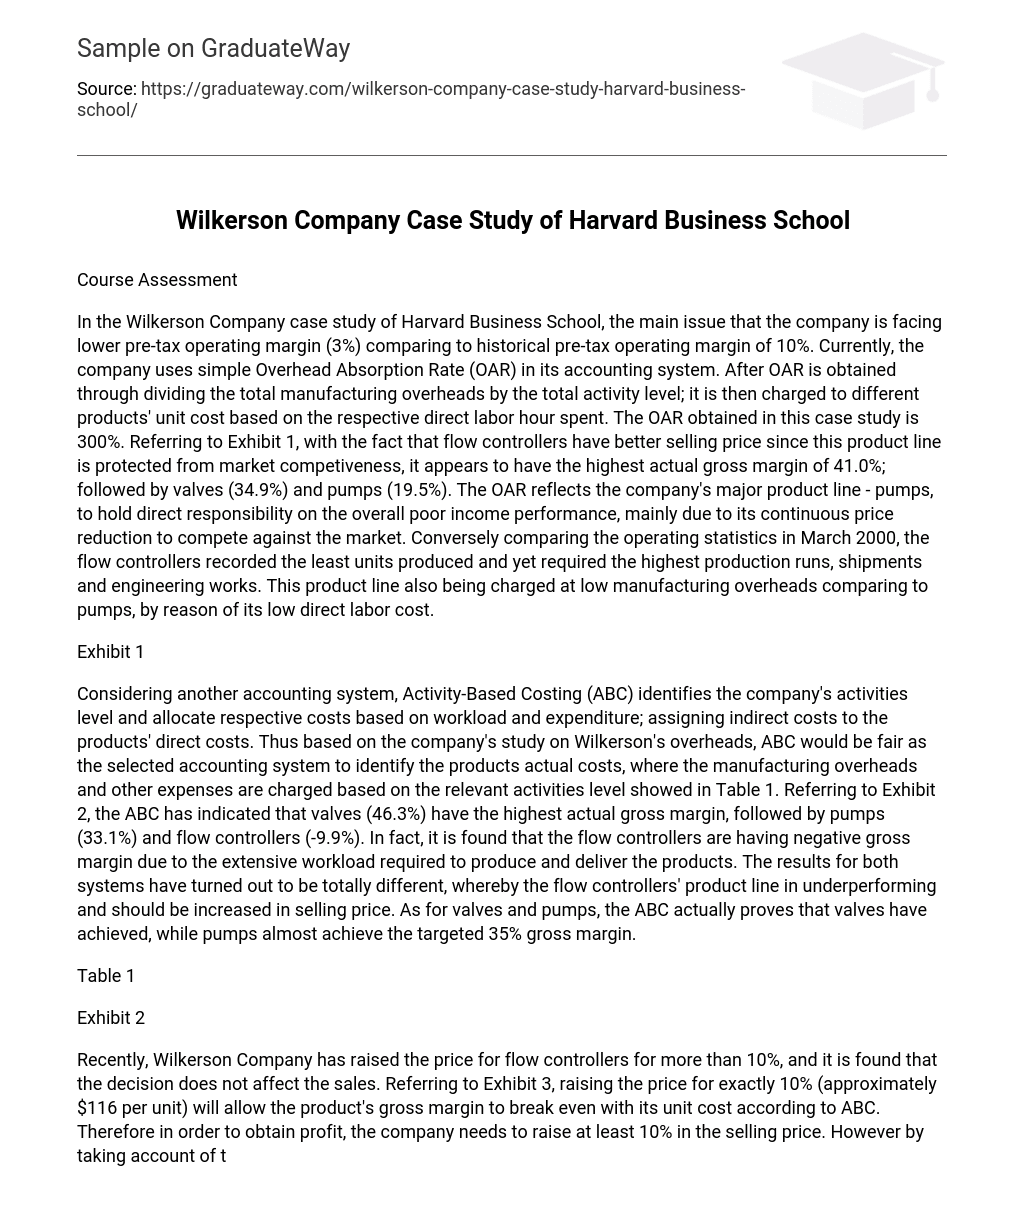 Wilkerson Company Case Study of Harvard Business School